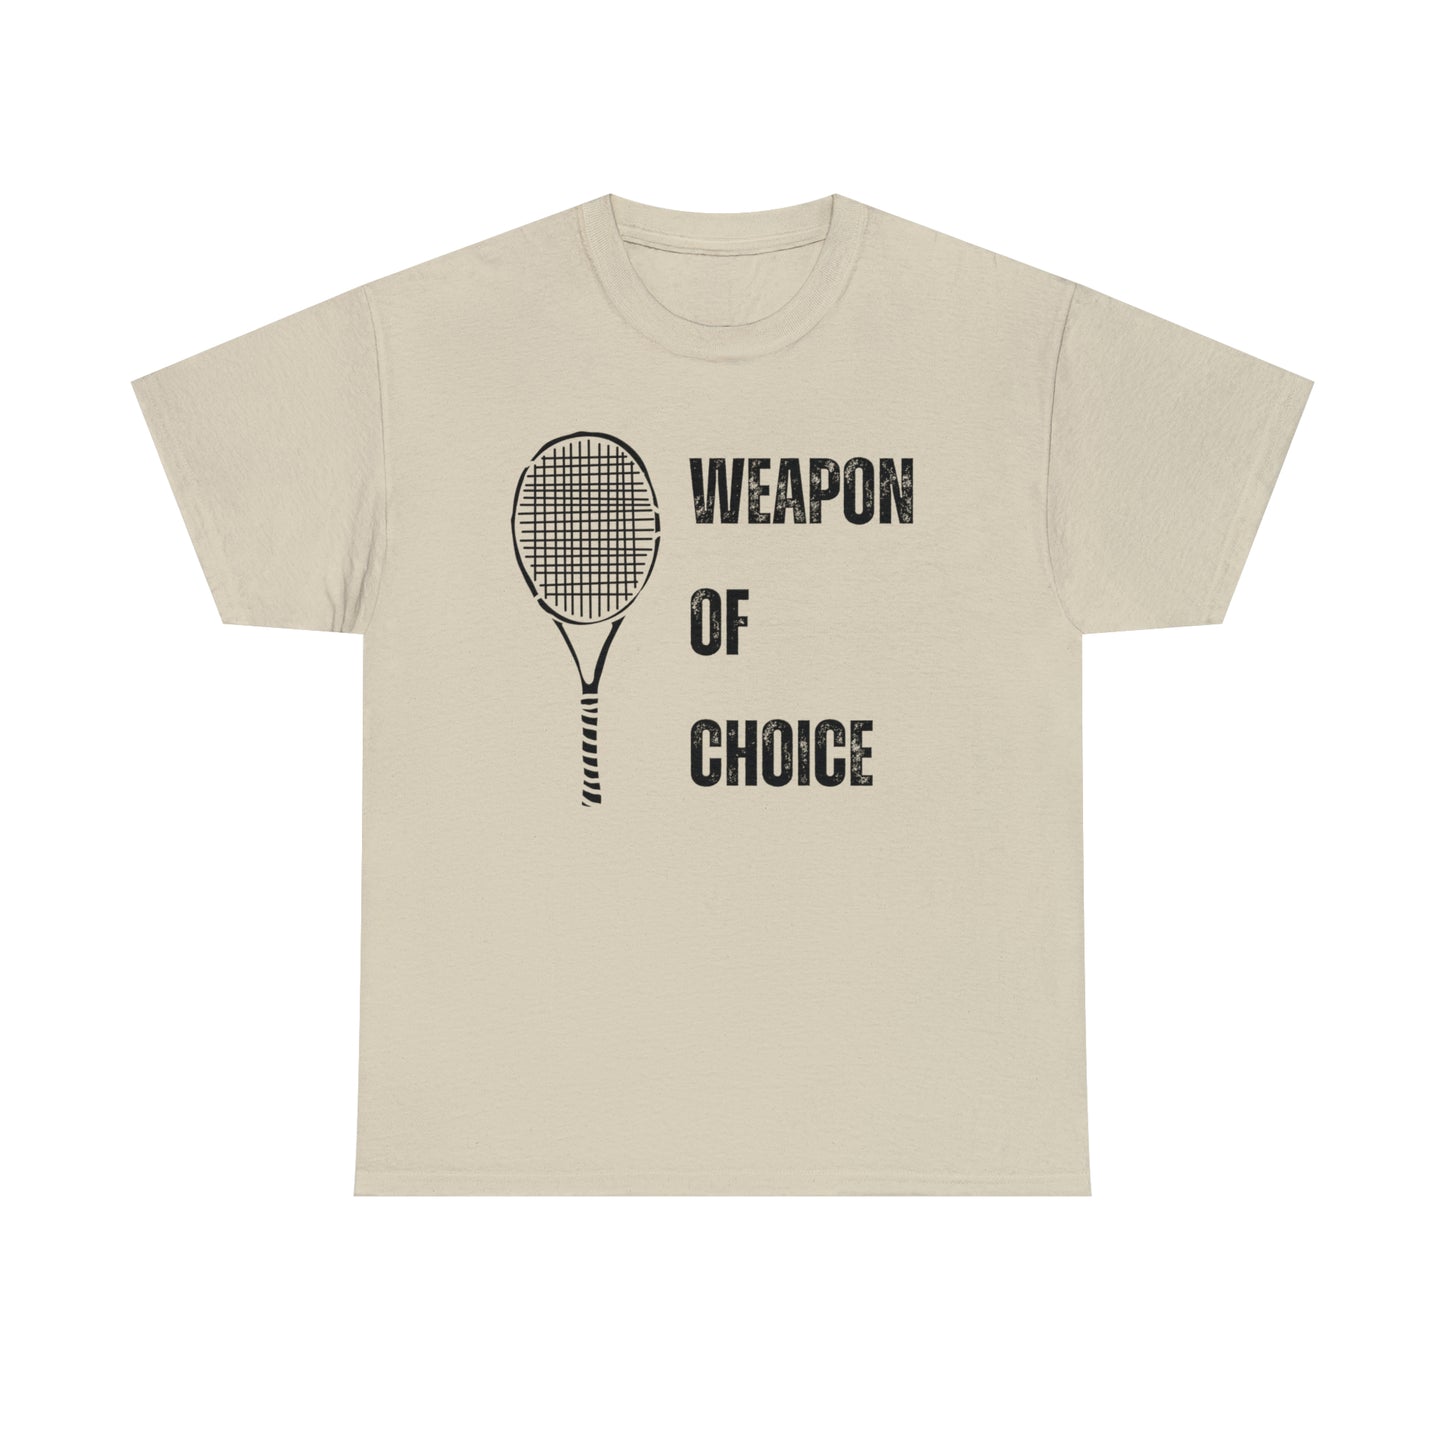 Tennis-Weapon of Choice Tee